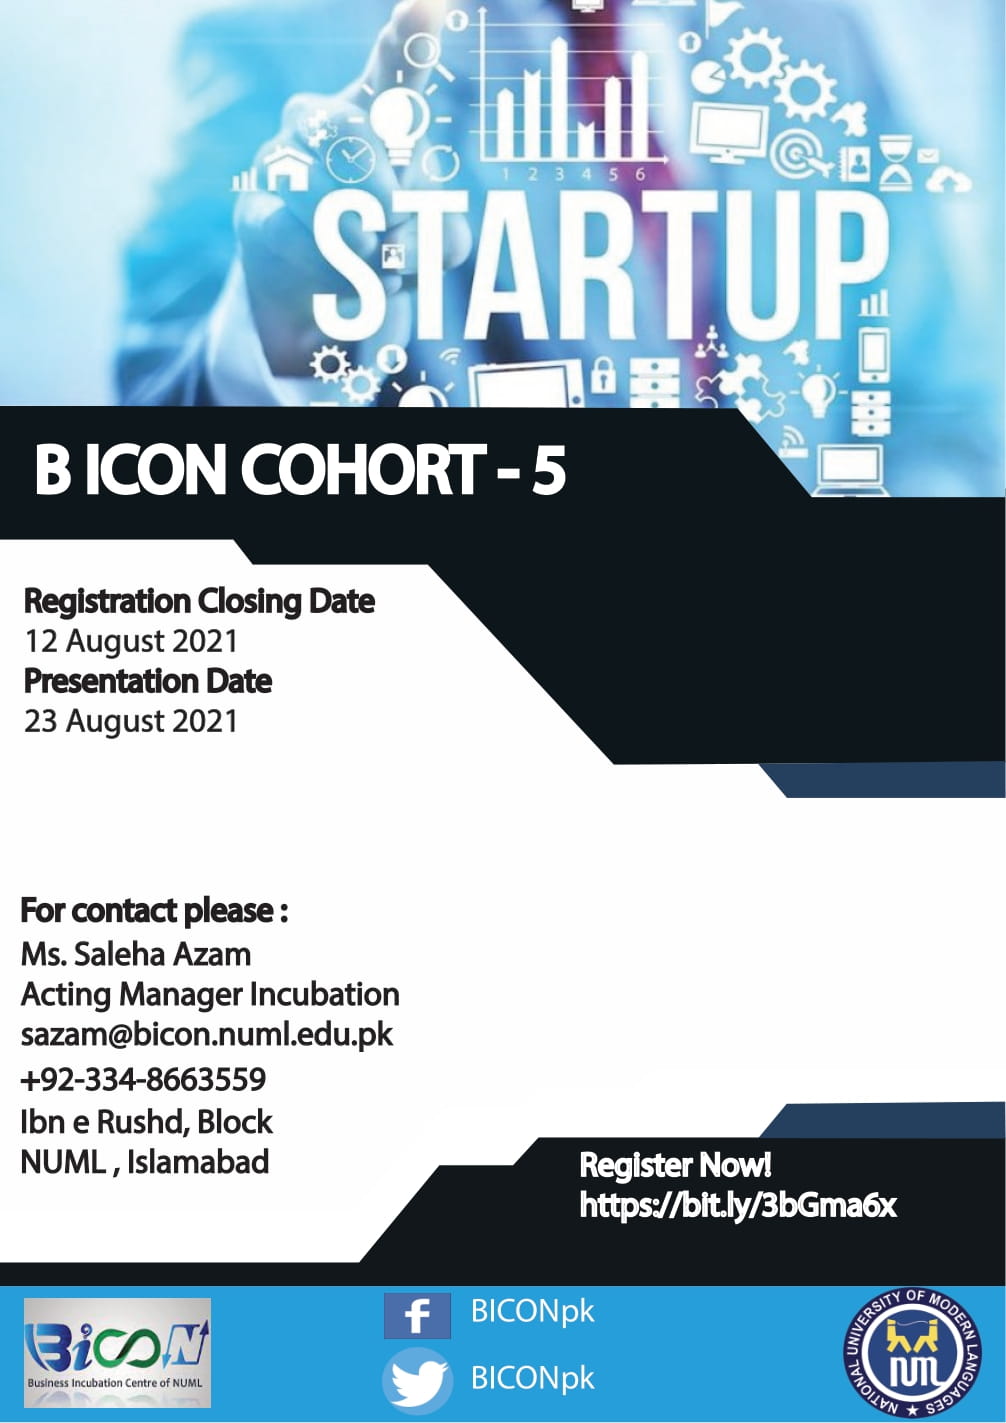 Cohort-5 for Business Idea Registration at BICON